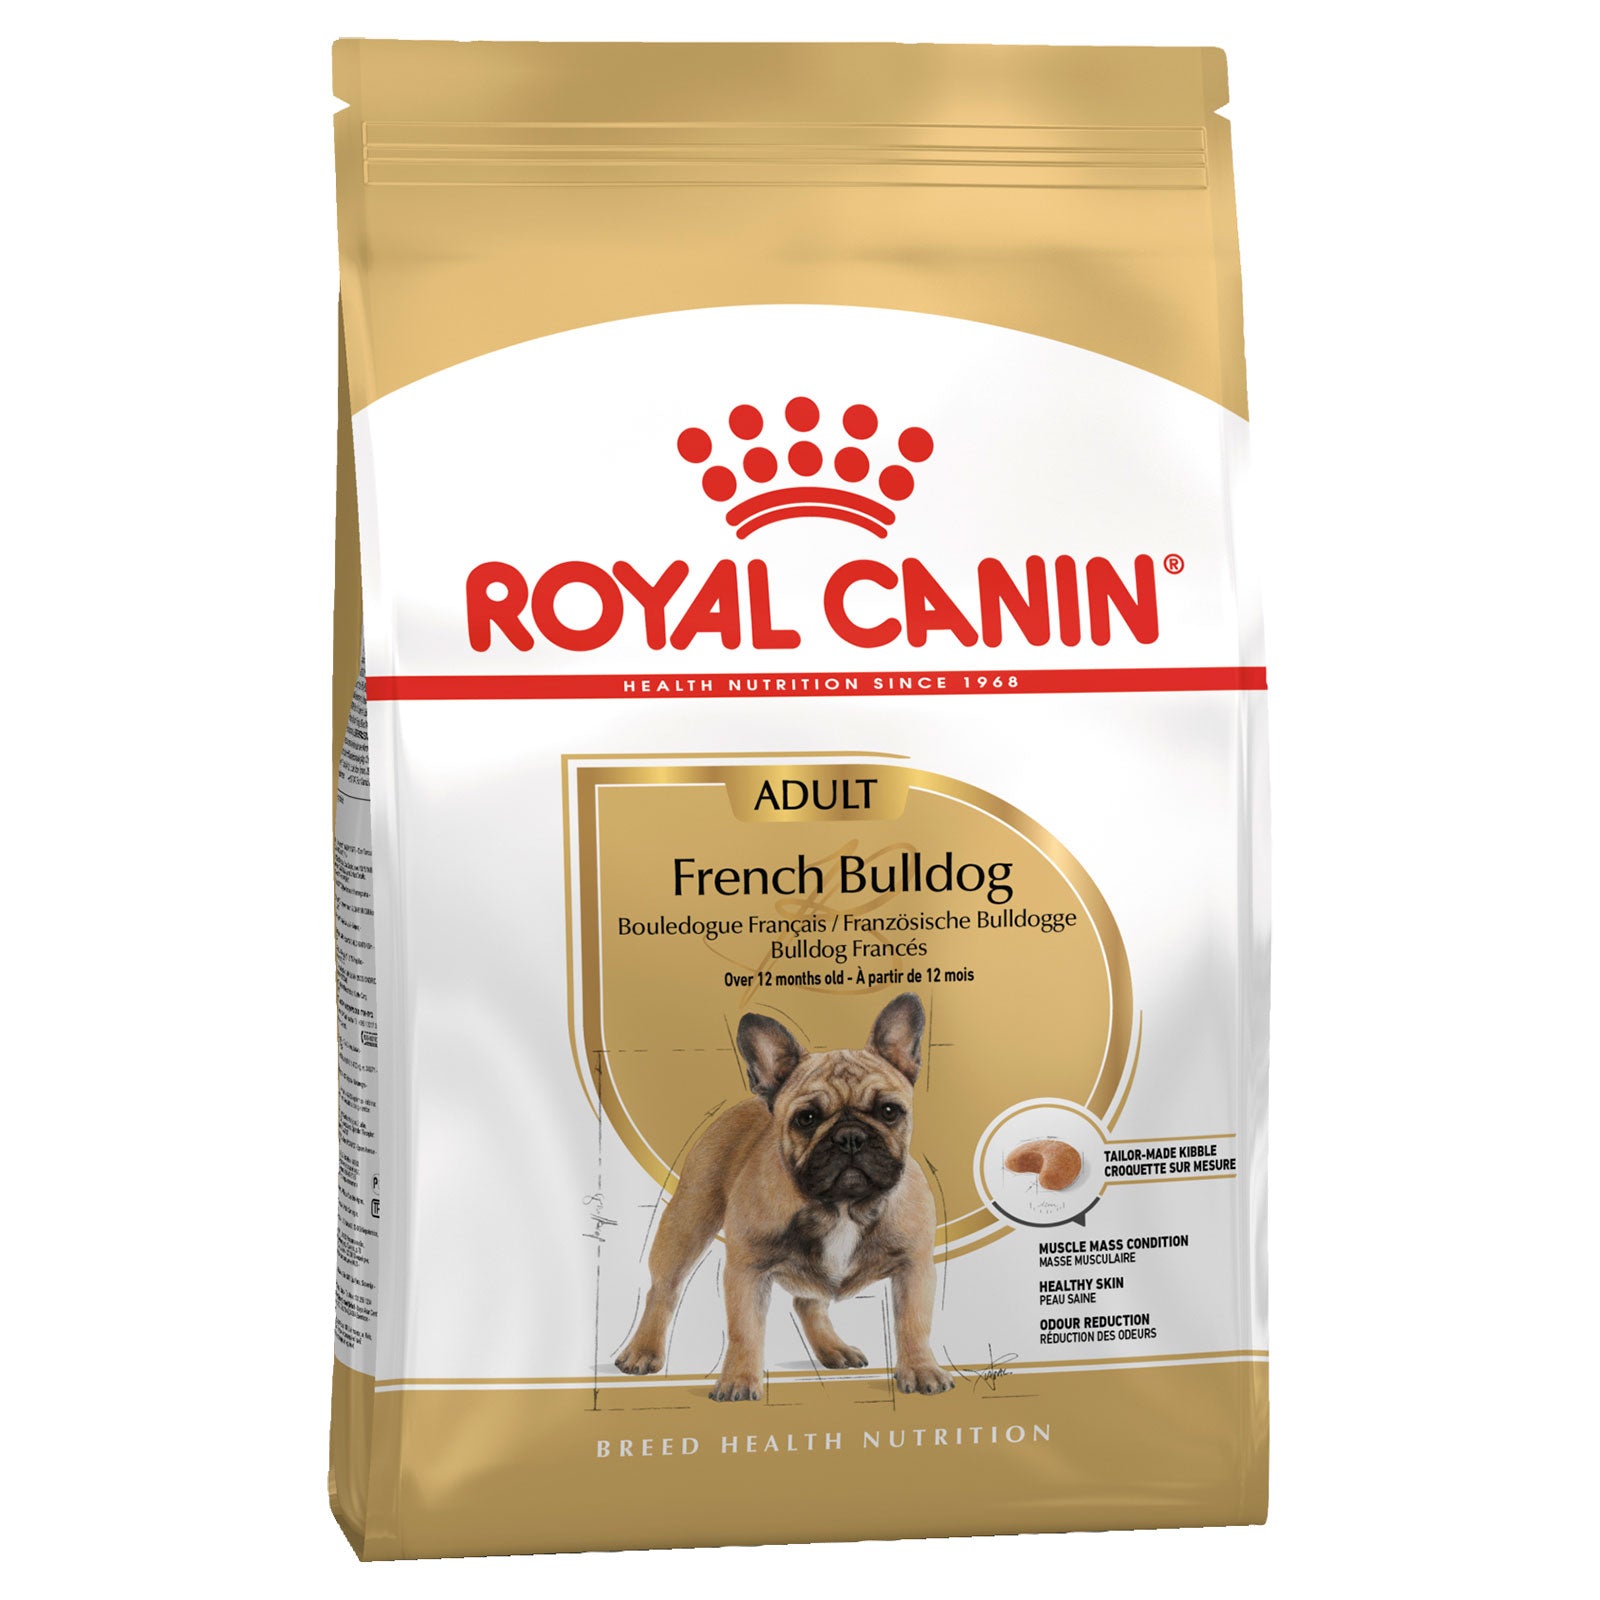 Royal Canin Dog Food Adult French Bulldog